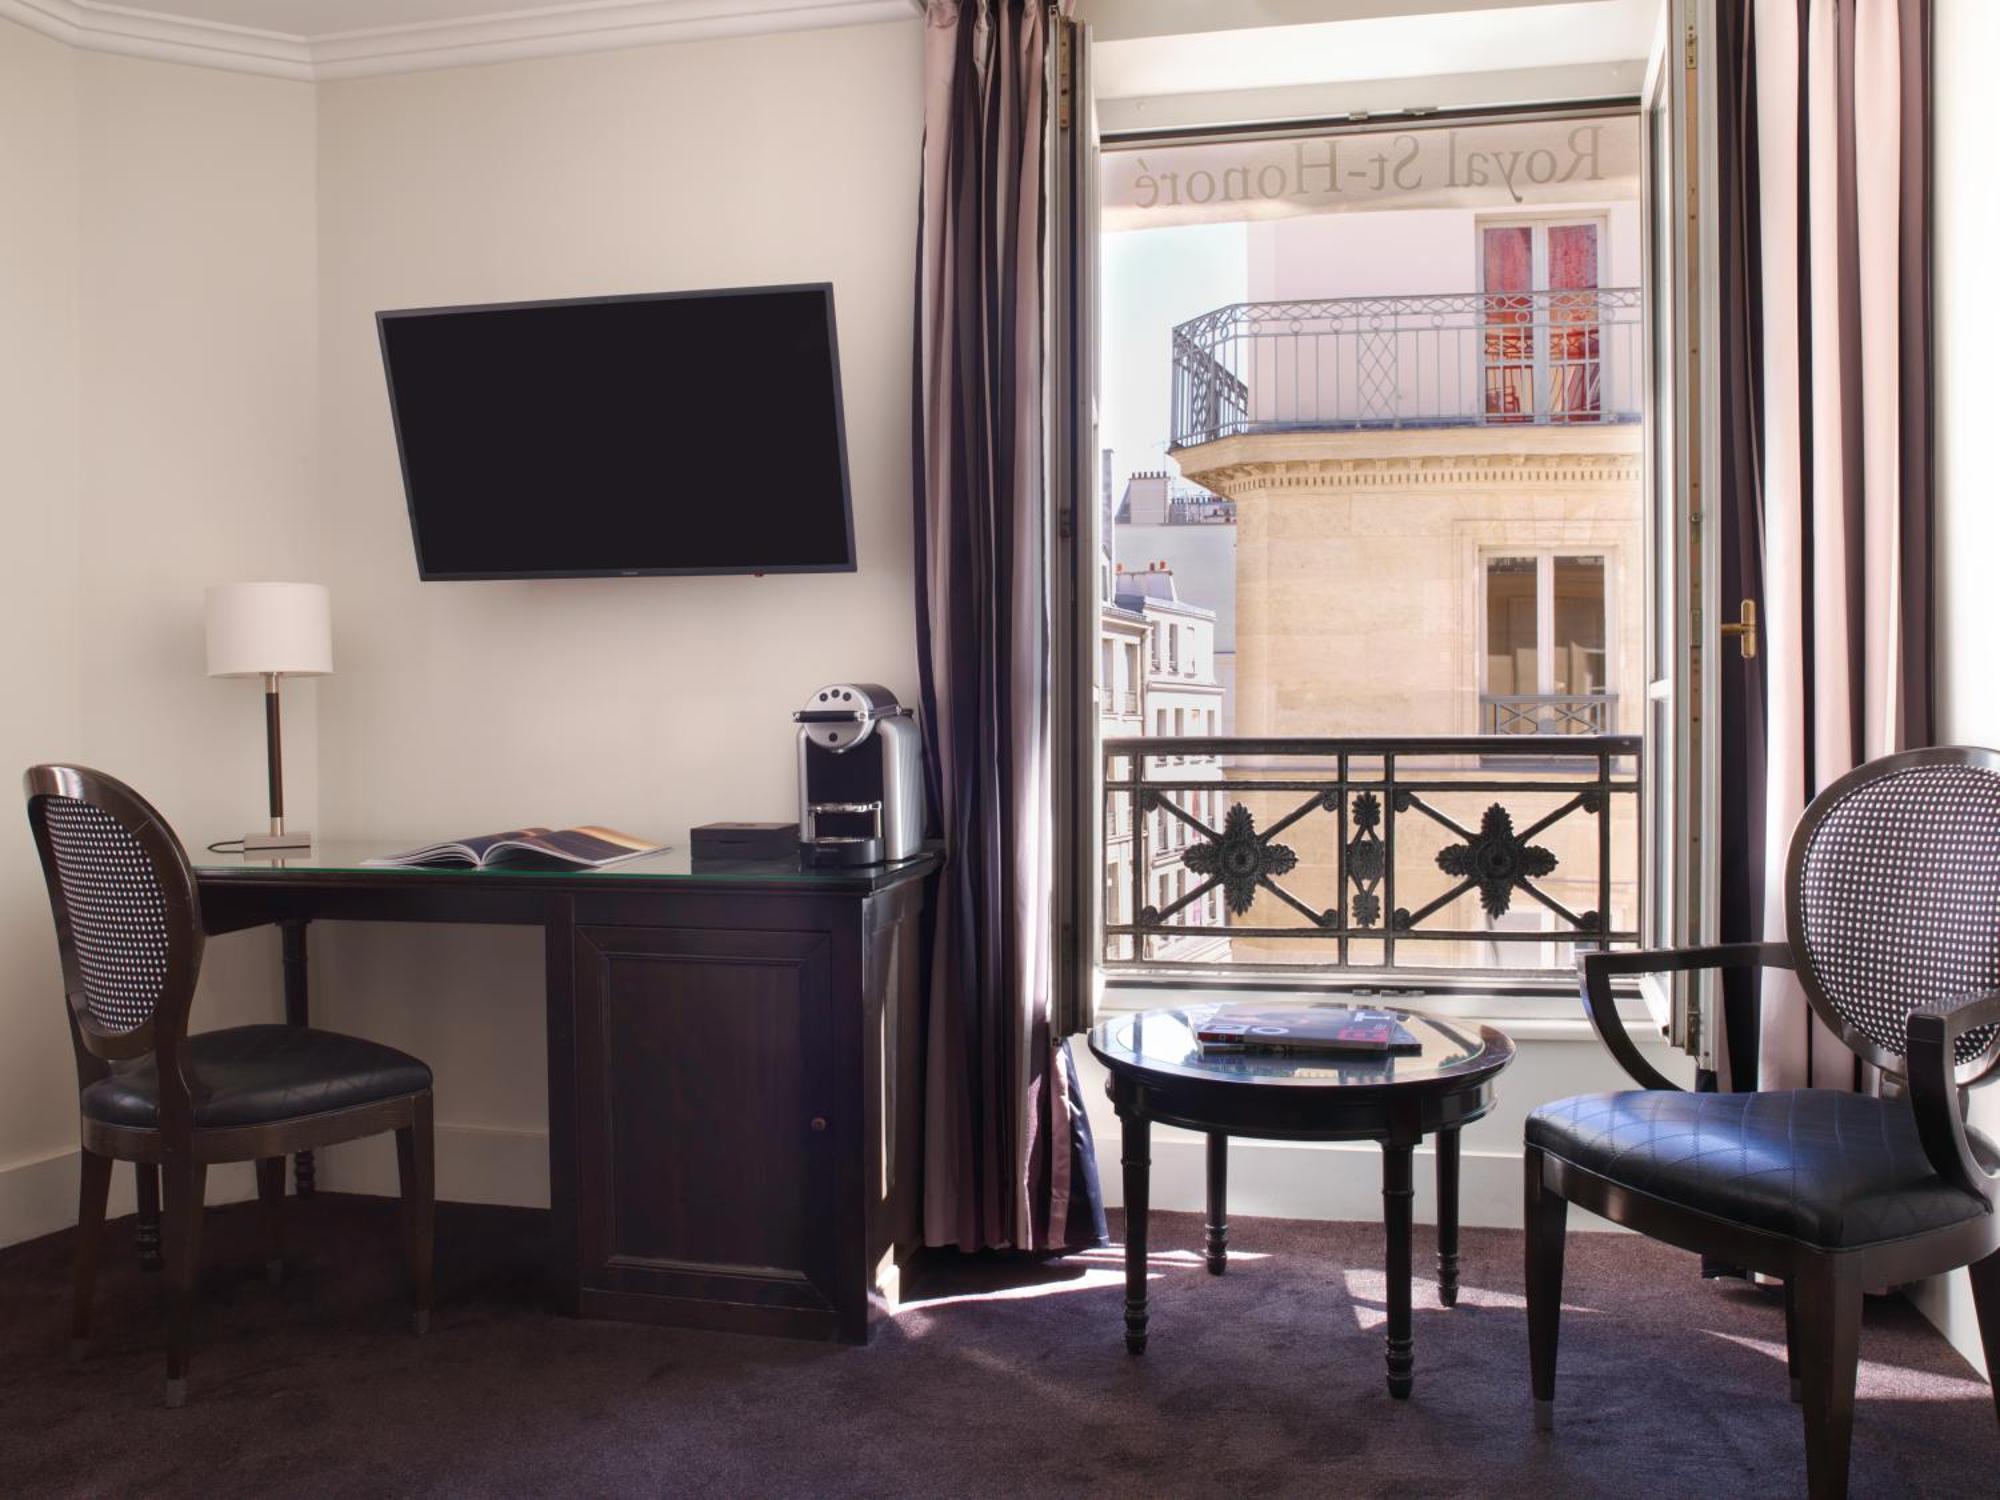 Hotel Royal Saint Honore Paris Louvre المظهر الخارجي الصورة